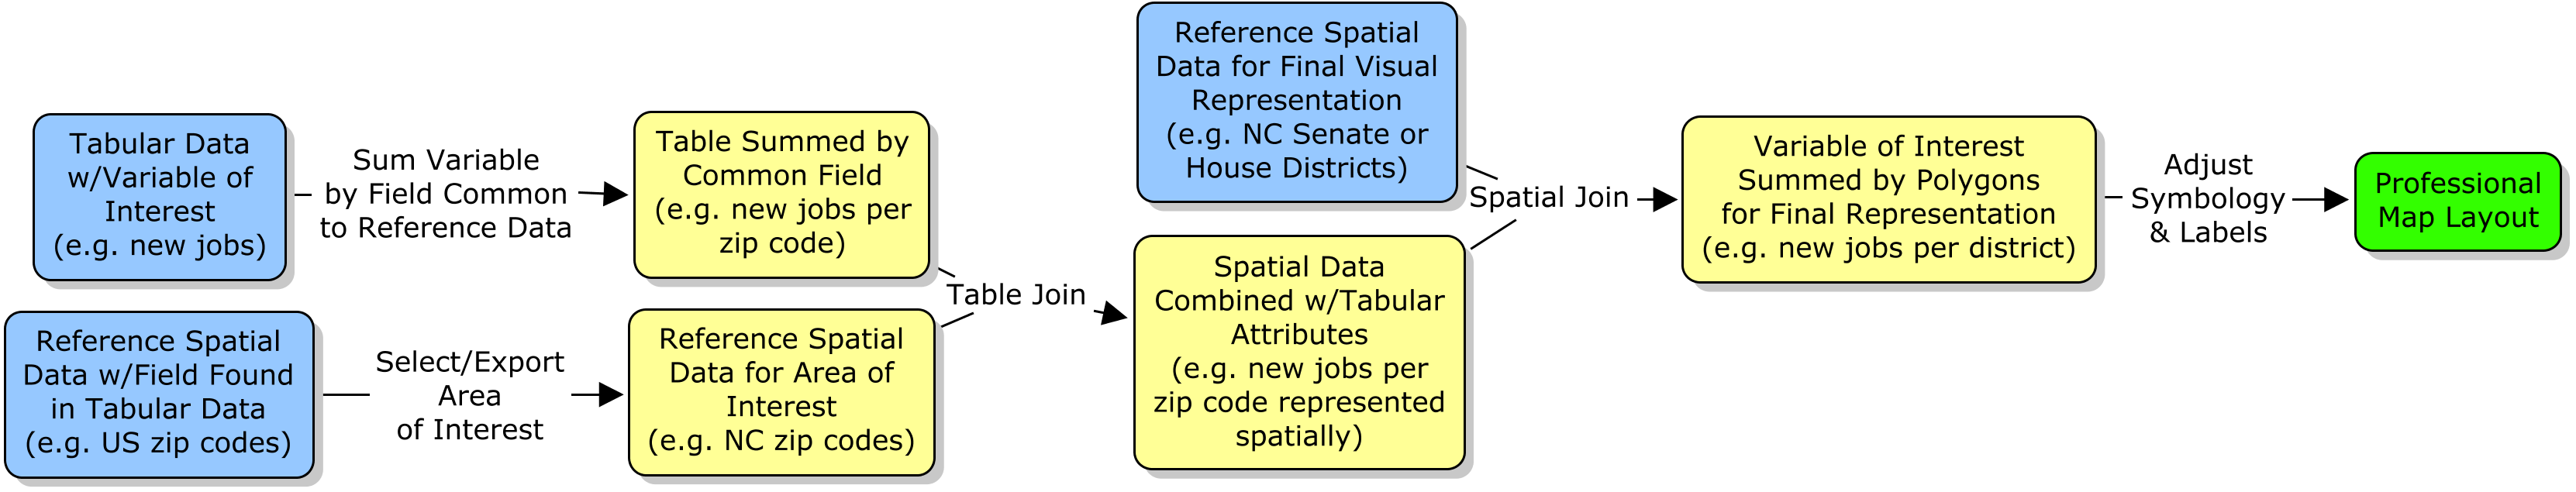 General workflow diagram